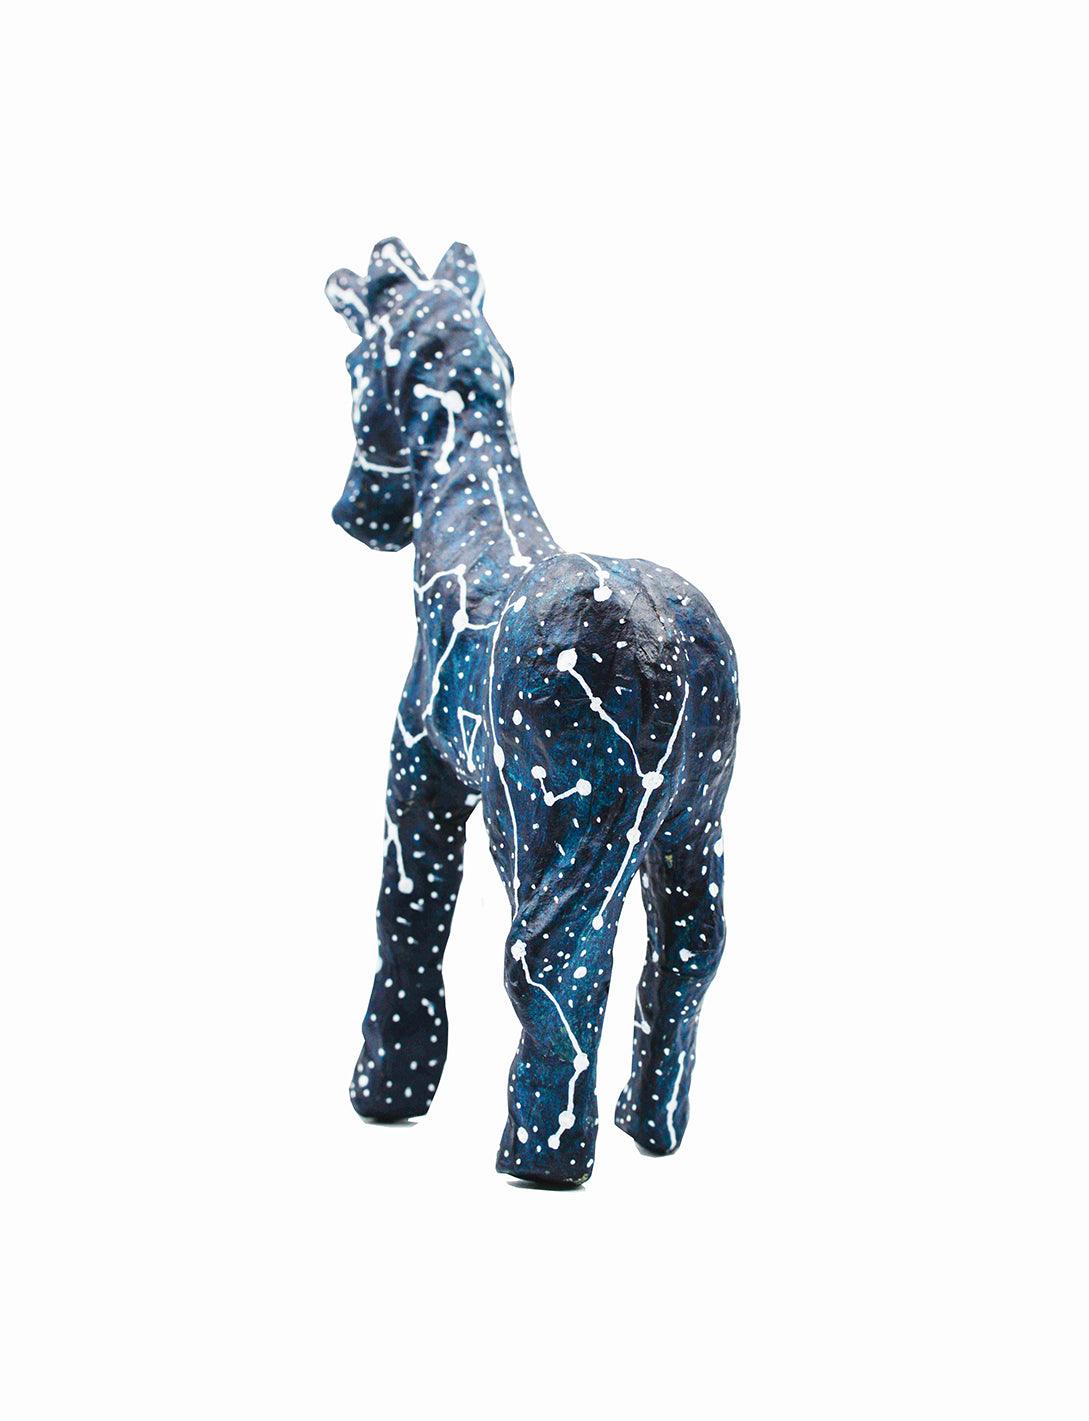 Constellation Unicorn Paper Mache Figure